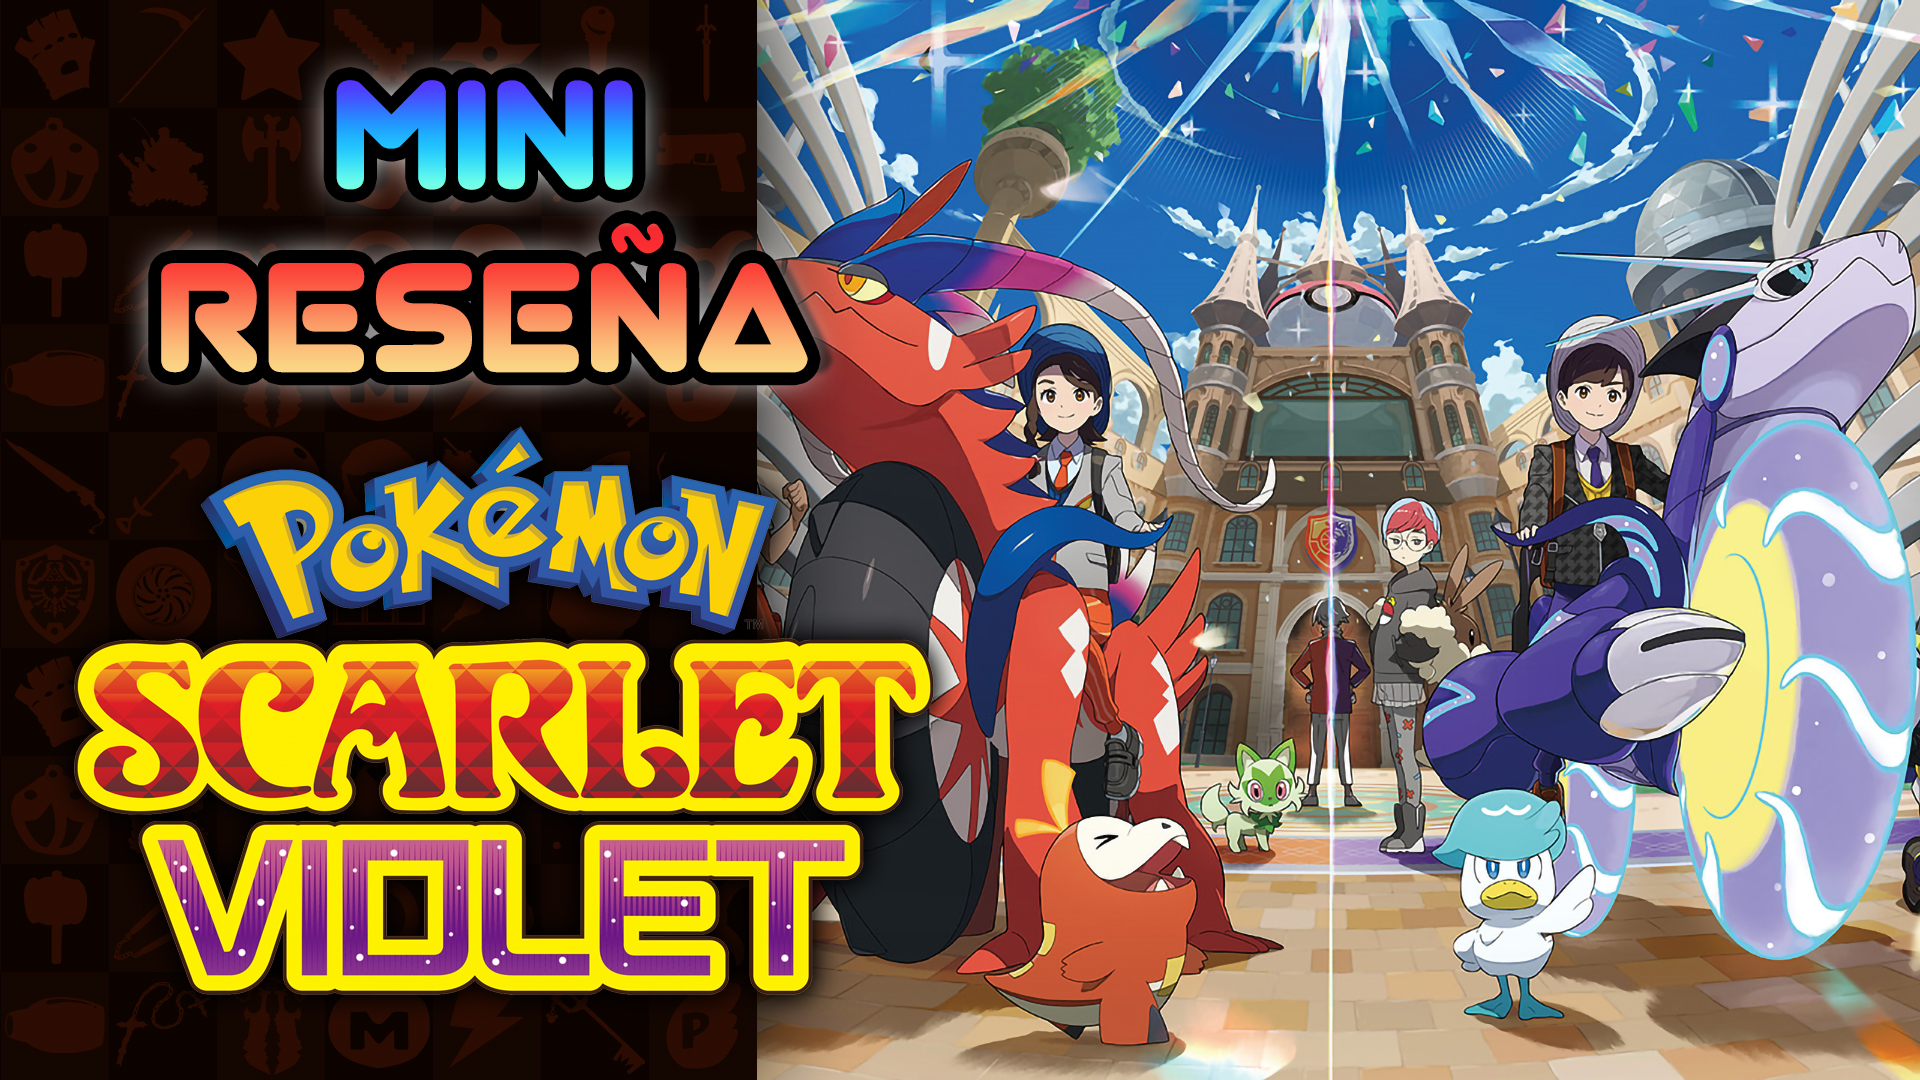 Mini Reseña Pokémon Scarlet & Violet – Muy buenas ideas, ojalá funcionara